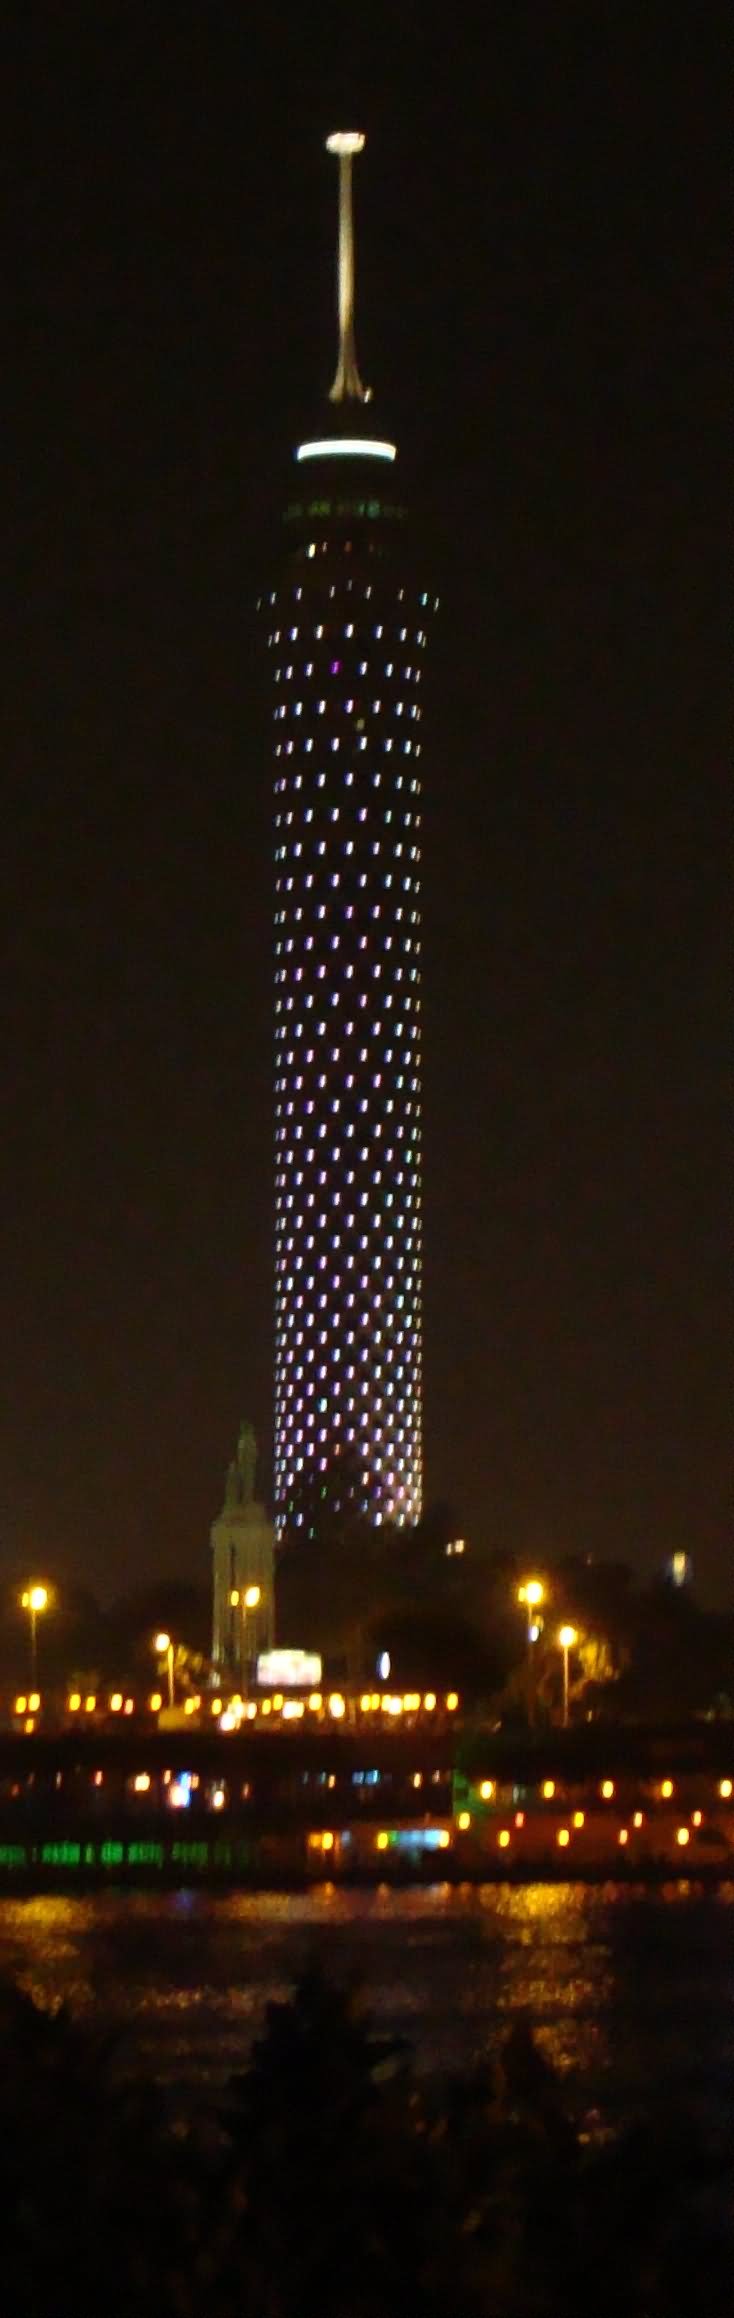 Beautiful Night View Of The Cairo Tower